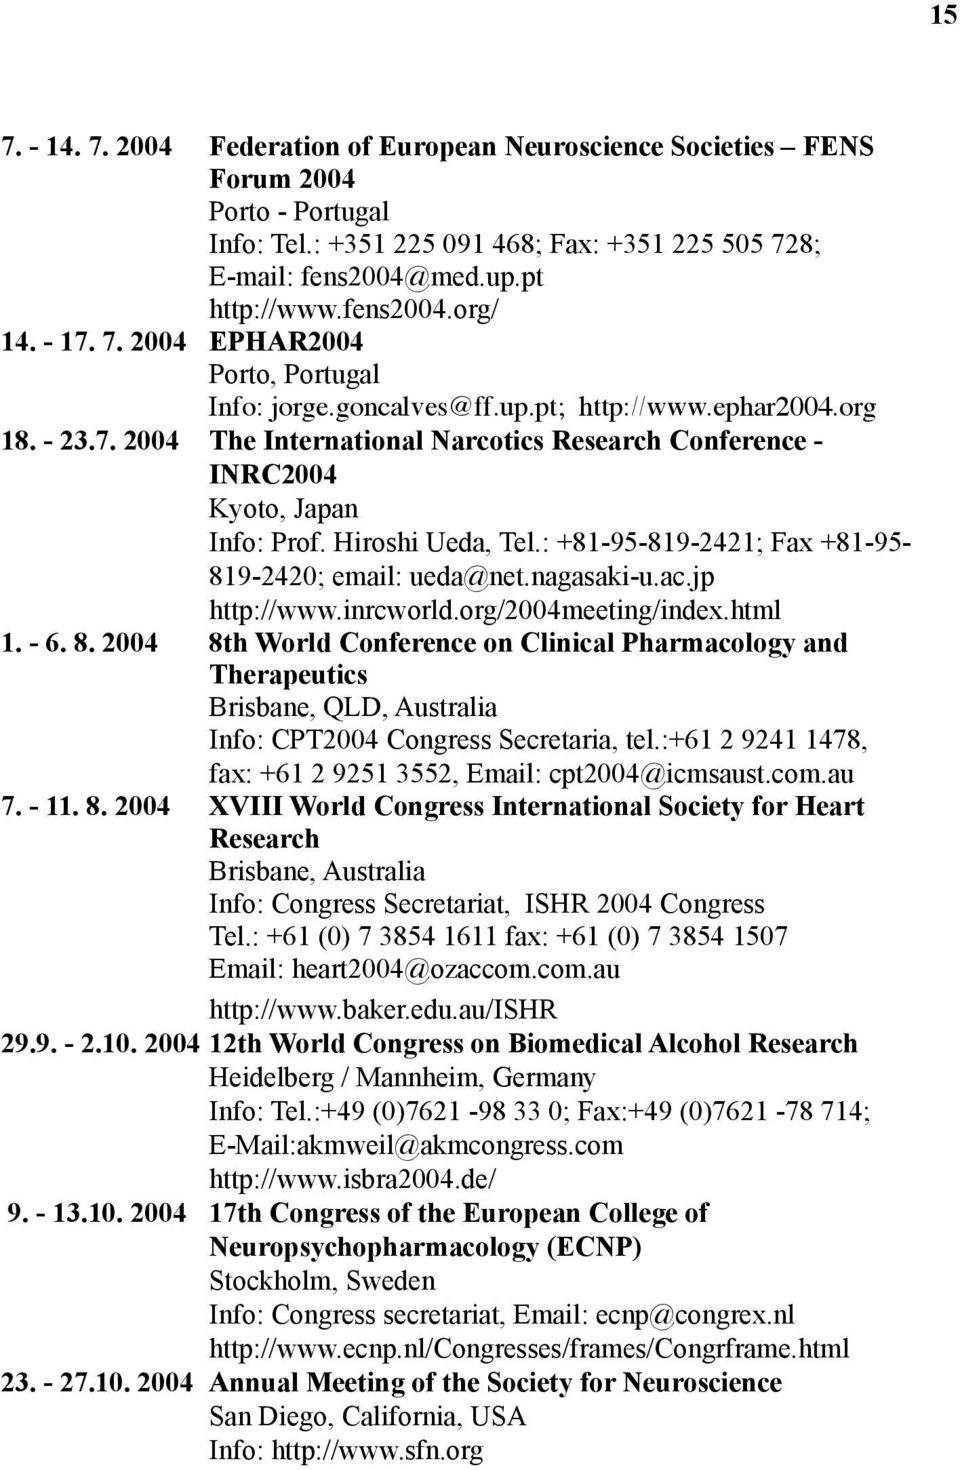 Hiroshi Ueda, Tel.: +81-95-819-2421; Fax +81-95- 819-2420; email: ueda@net.nagasaki-u.ac.jp http://www.inrcworld.org/2004meeting/index.html 1. - 6. 8. 2004 8th World Conference on Clinical Pharmacology and Therapeutics Brisbane, QLD, Australia Info: CPT2004 Congress Secretaria, tel.